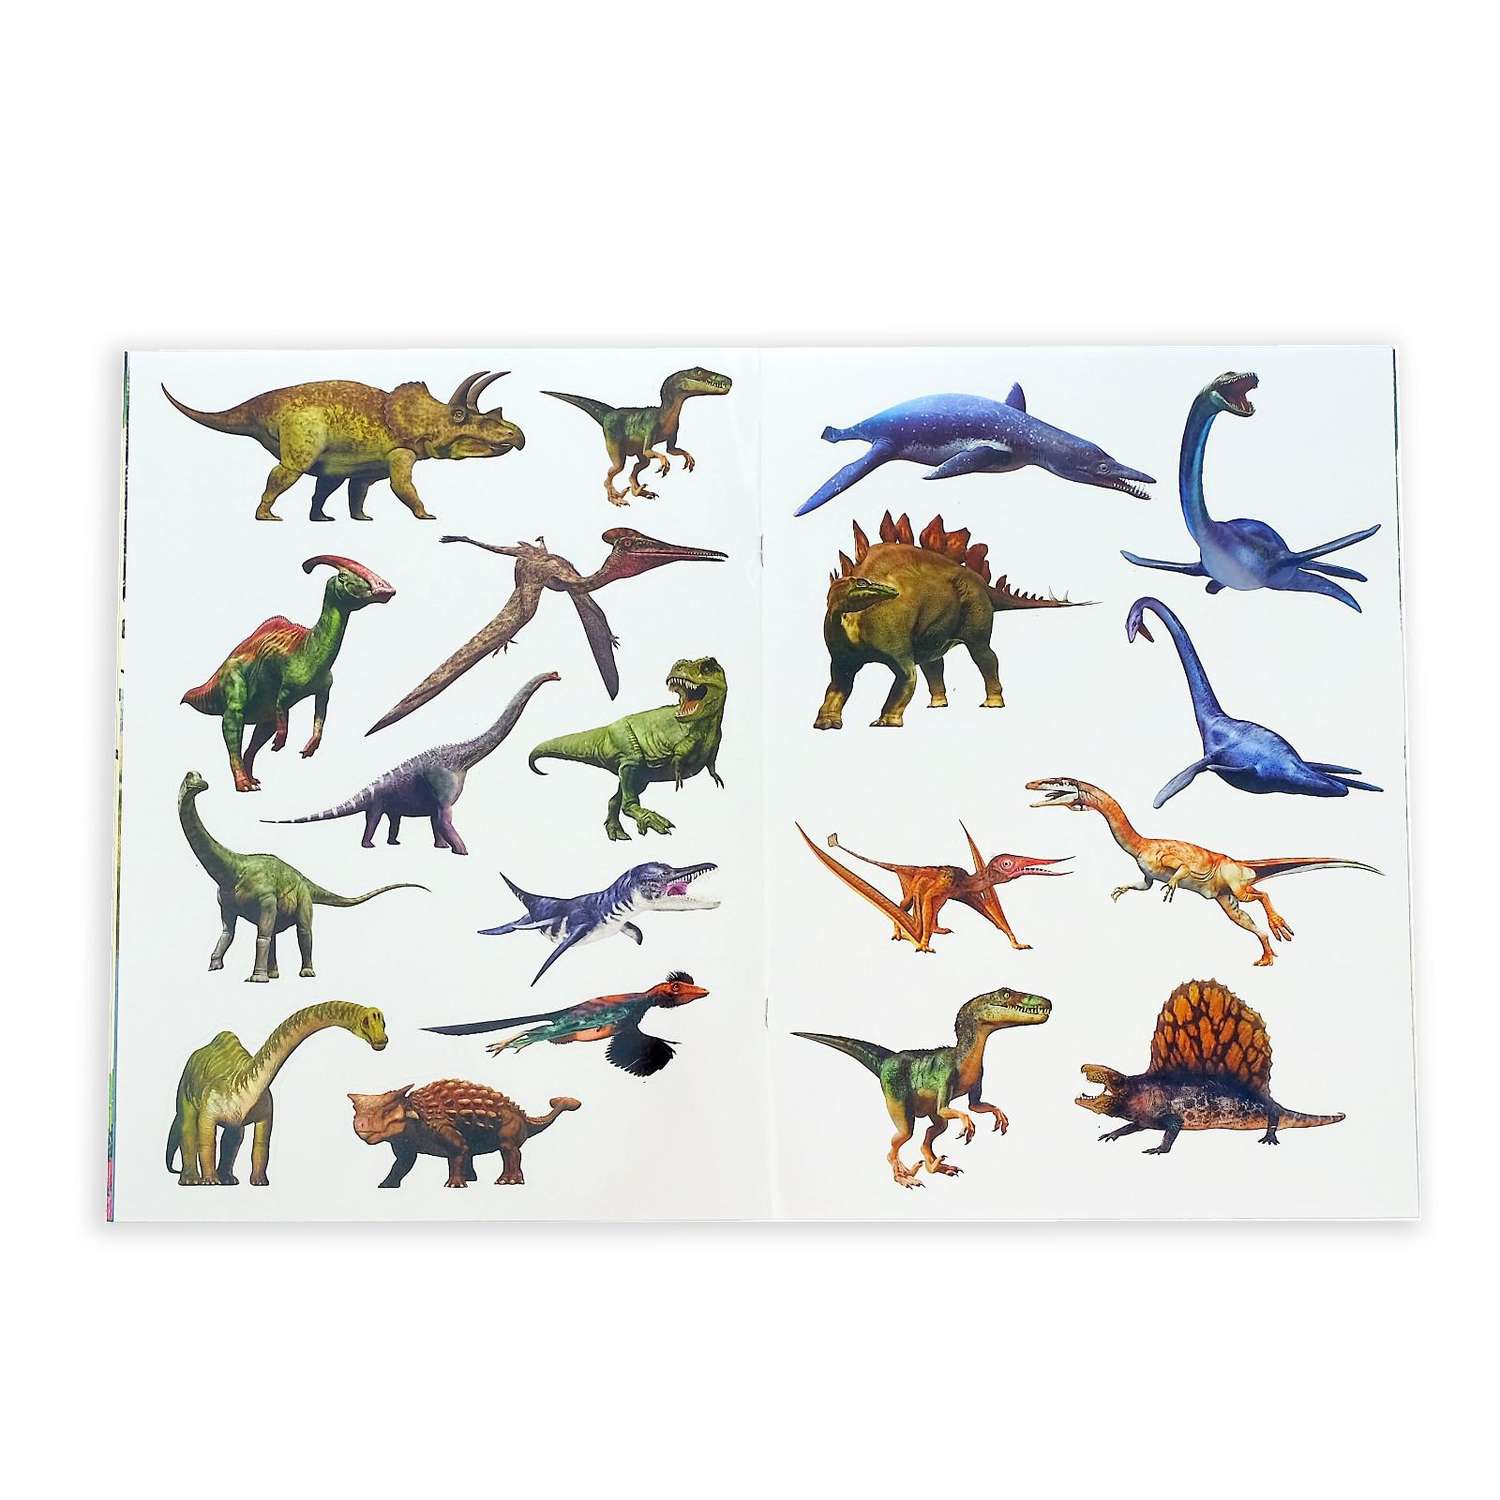 Набор книг с наклейками Буква-ленд «Энциклопедии о динозаврах и космосе» набор 2 шт. по 8 стр. формат А4 - фото 3